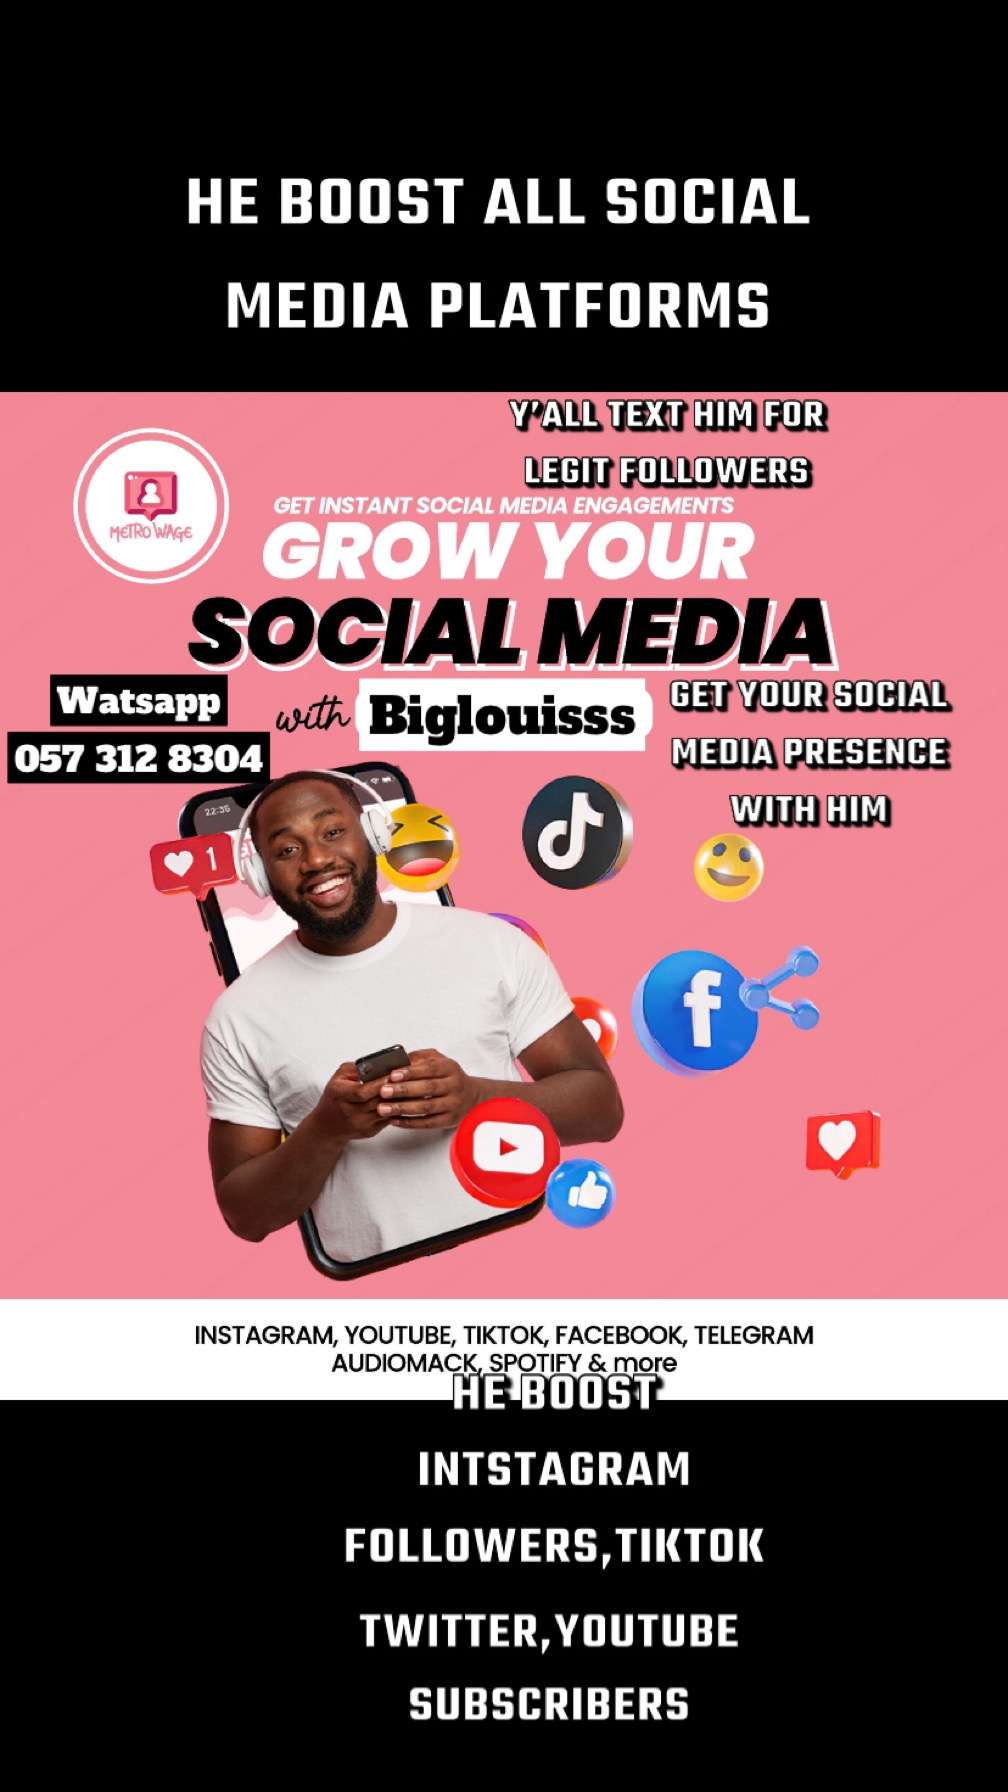 Boosting of all social media platforms